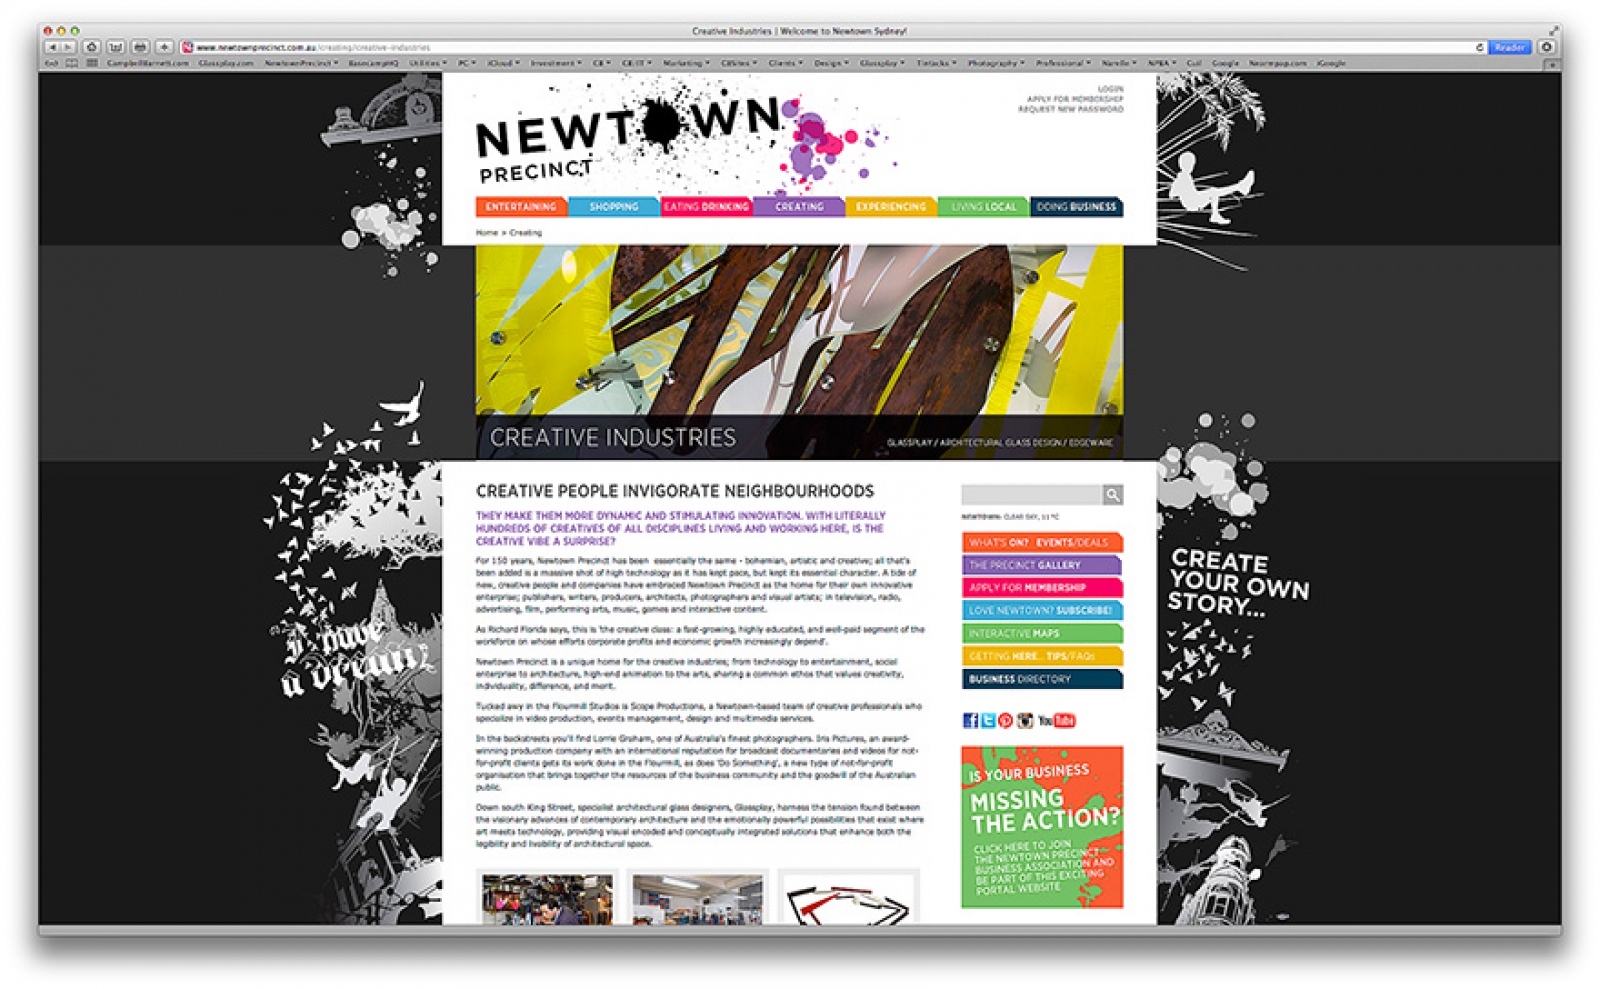 Newtown Precinct Web Portal